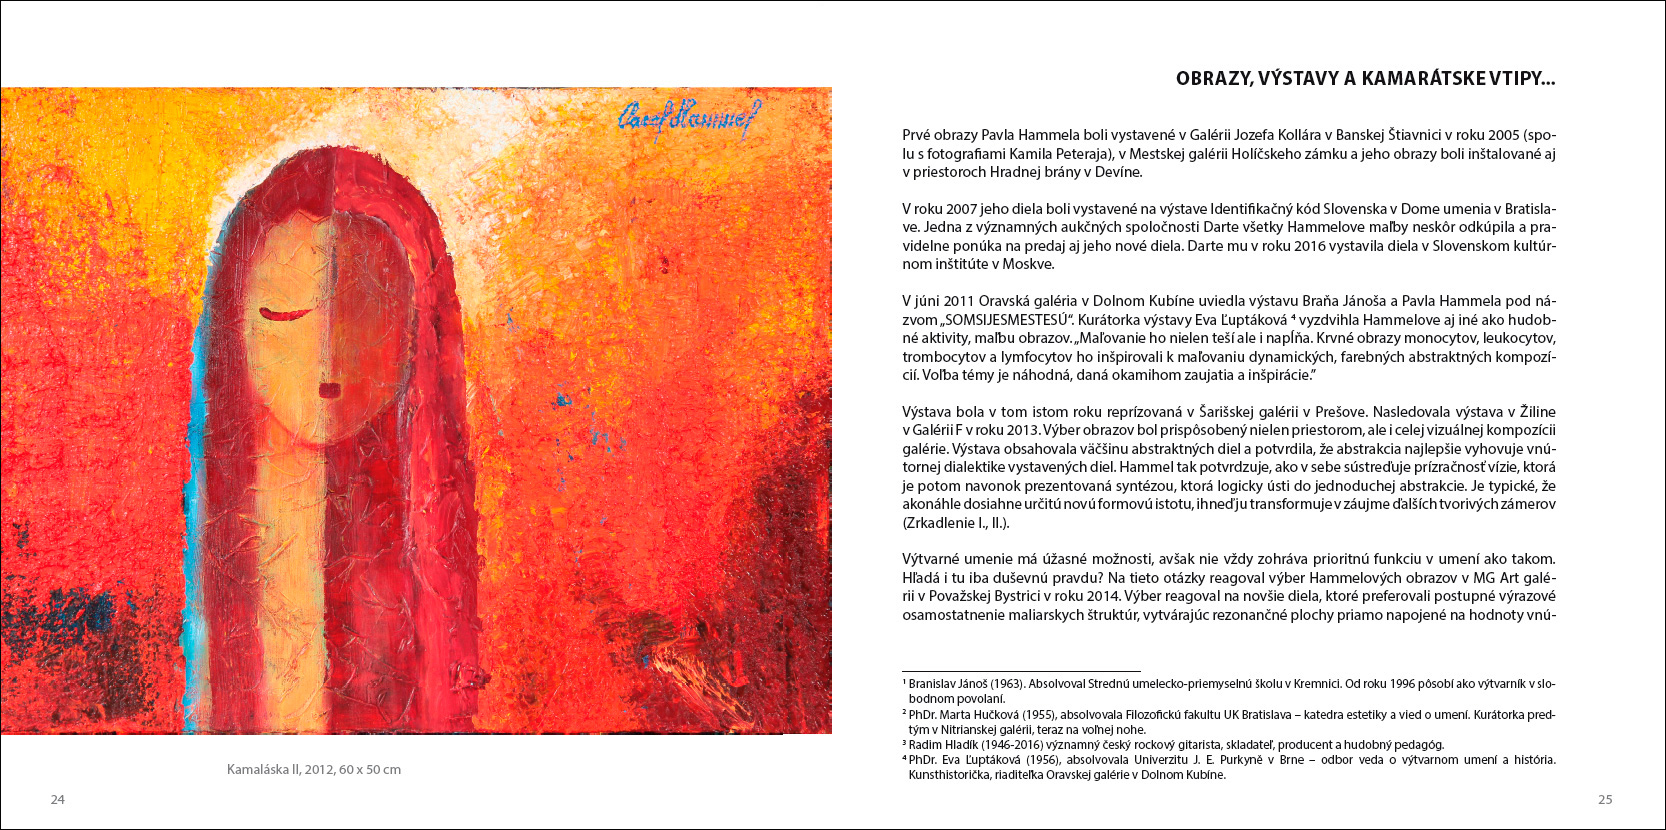 Pavol Hammel - Farebná pošta + hudobné CD